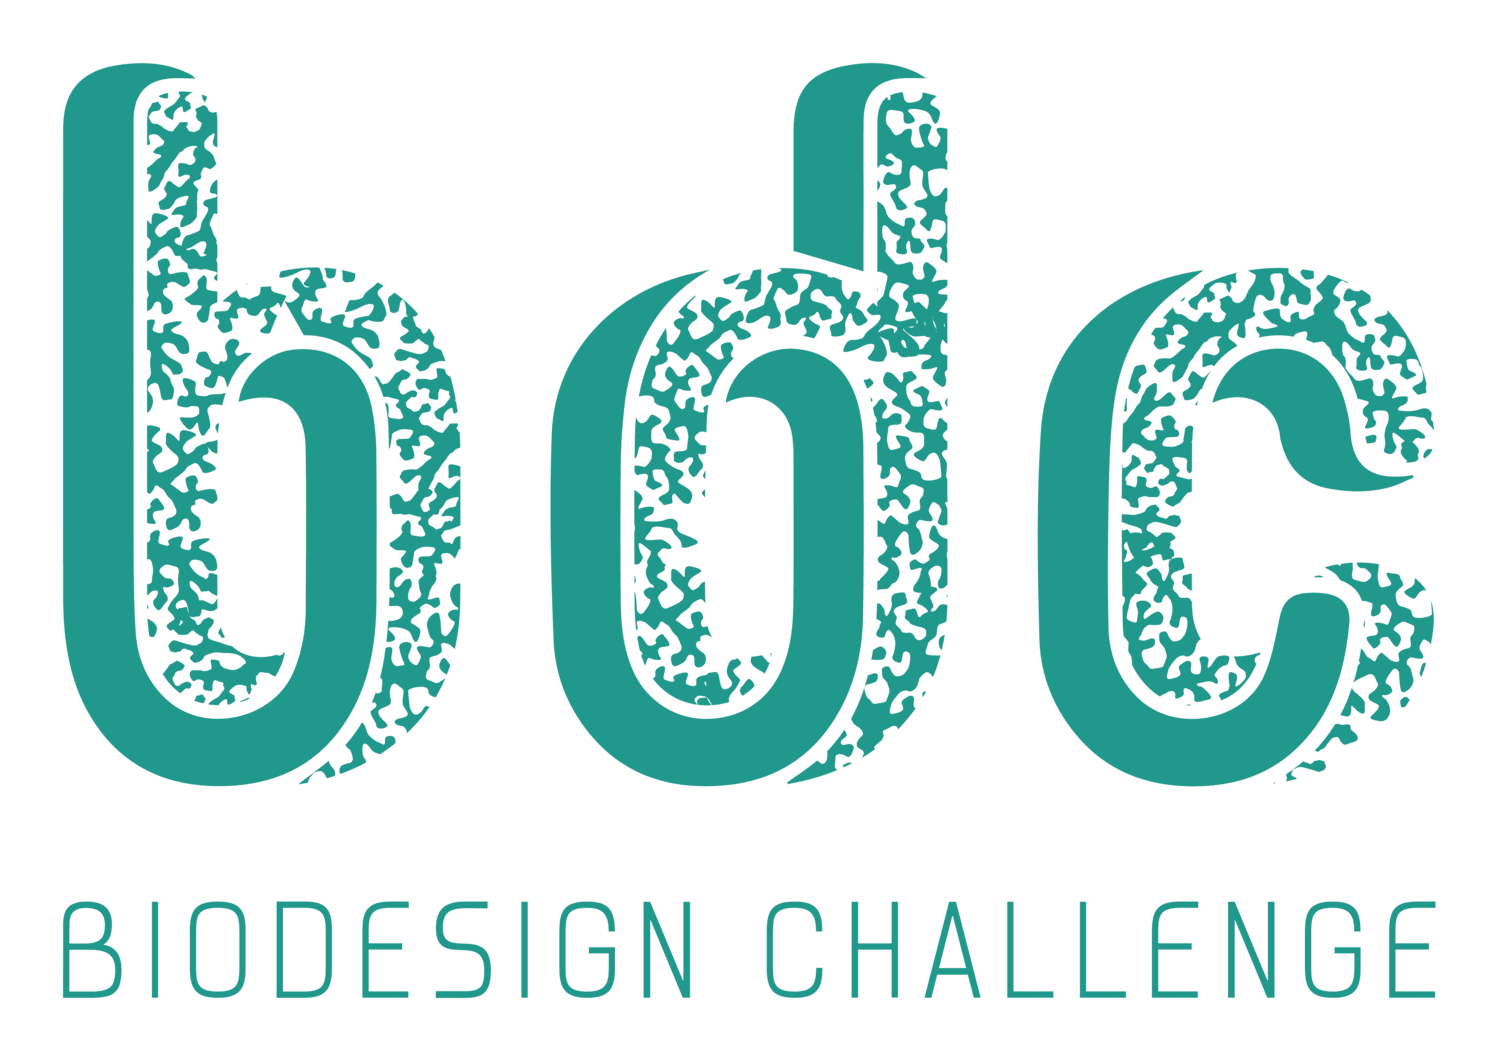 Biodesign Challenge logo